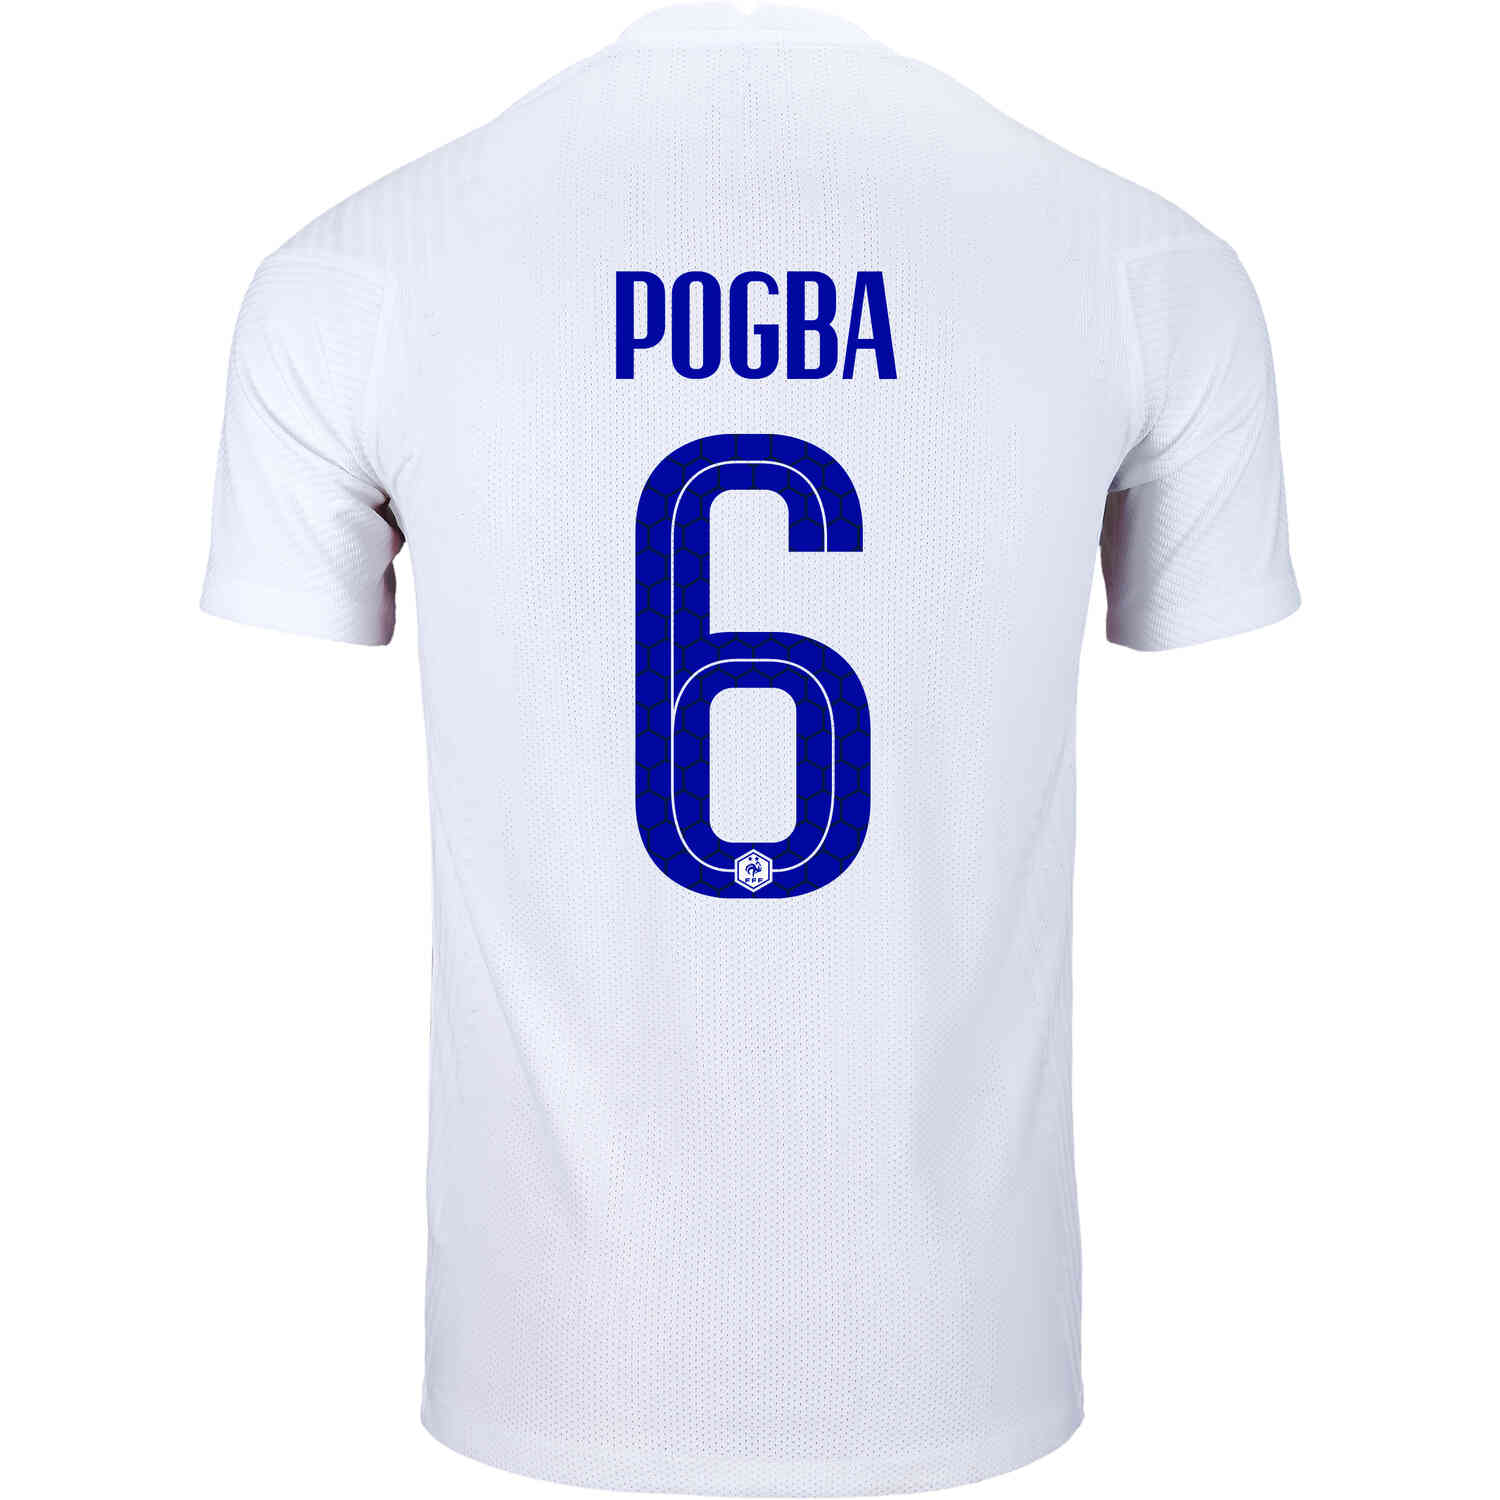 Paul Pogba Bags for Sale